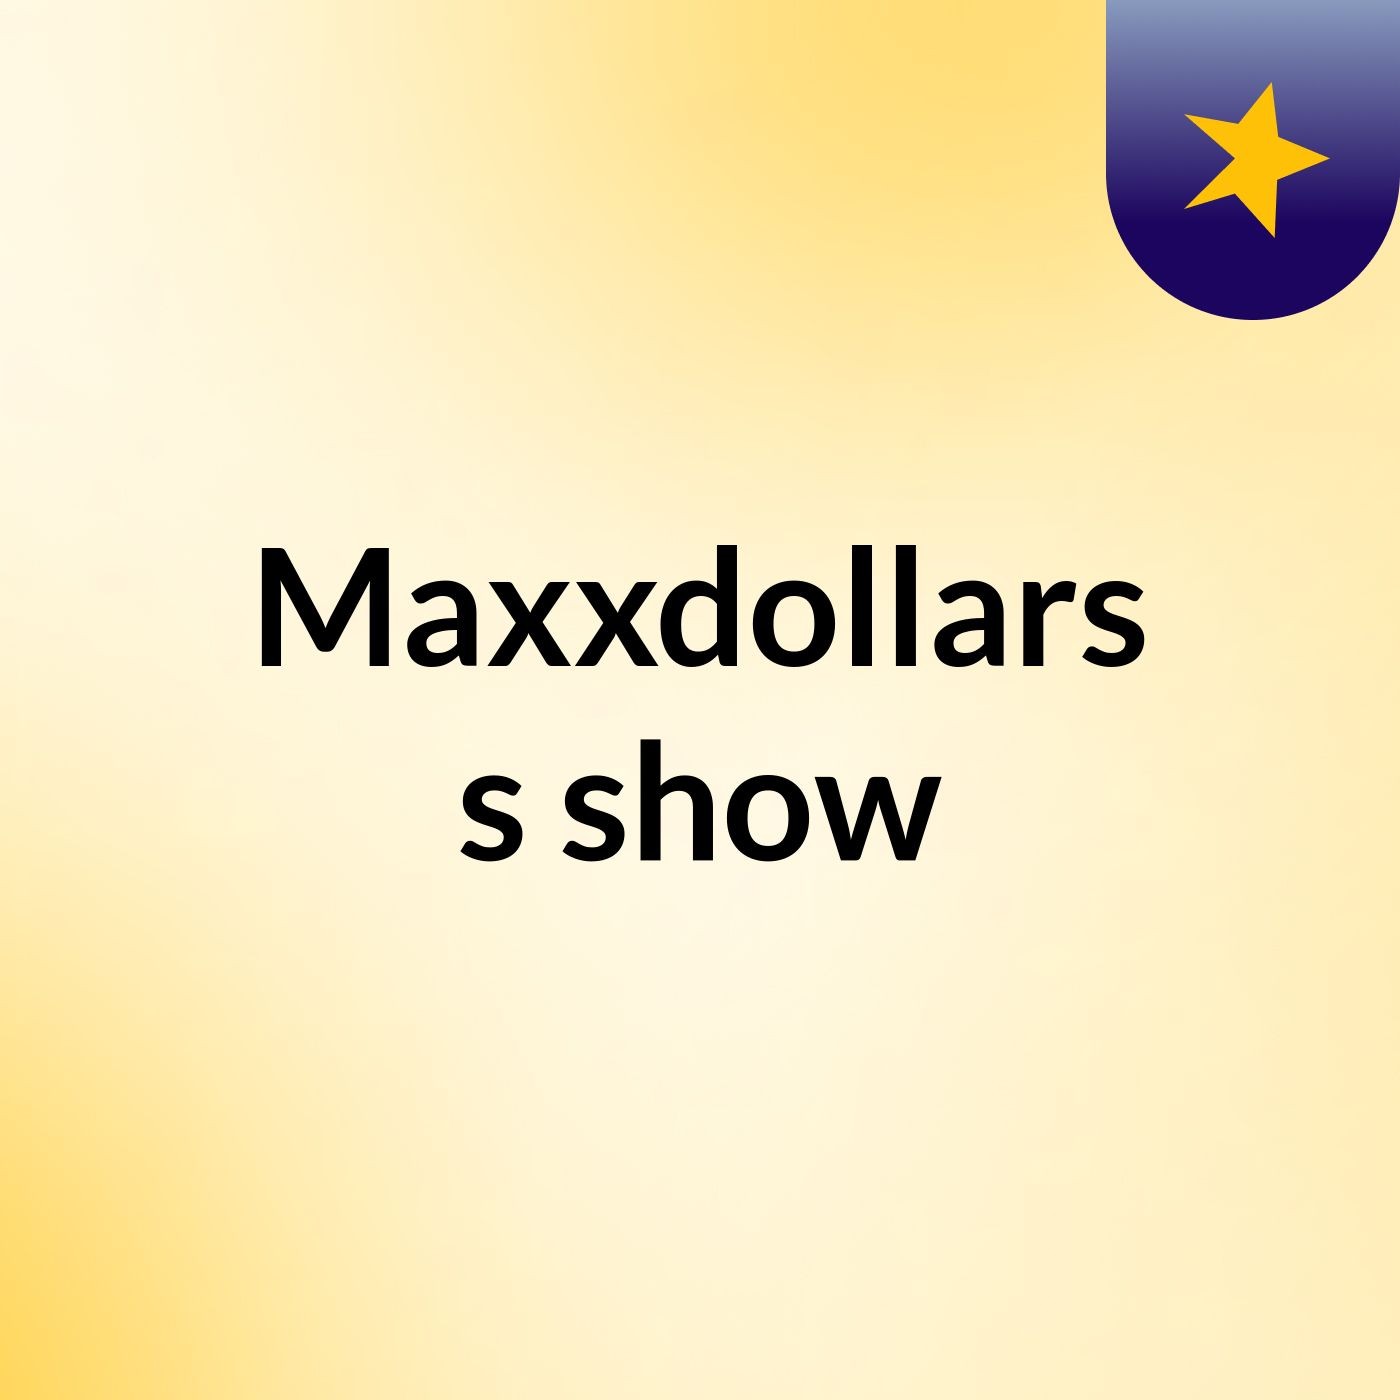 Maxxdollars's show